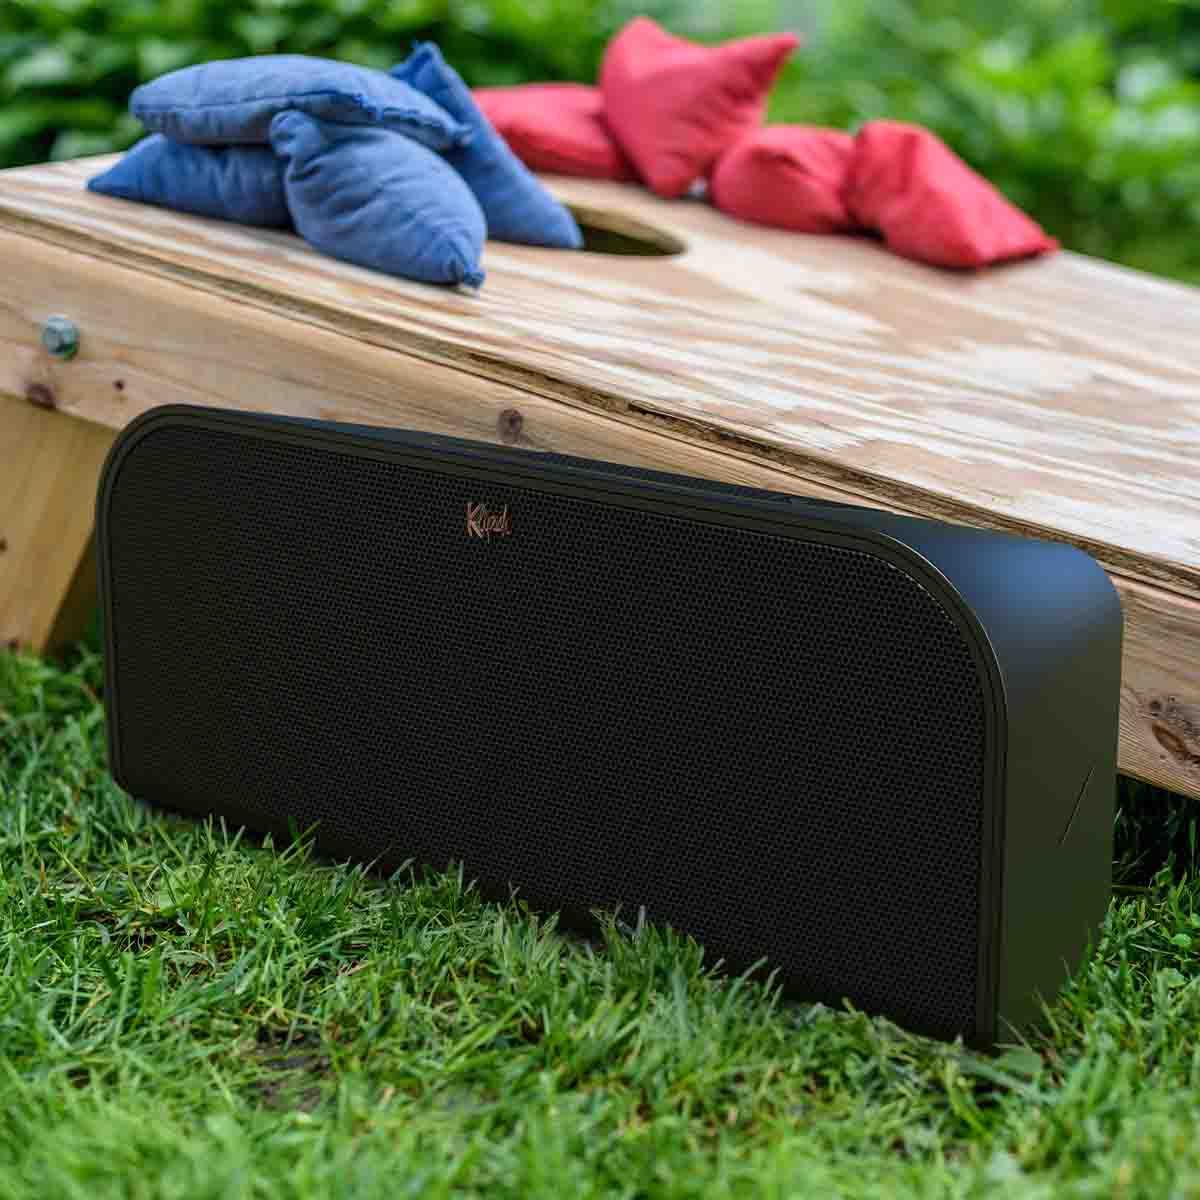 Klipsch Groove XXL Portable Bluetooth Wireless Speaker - Black - on grass next to cornhole board